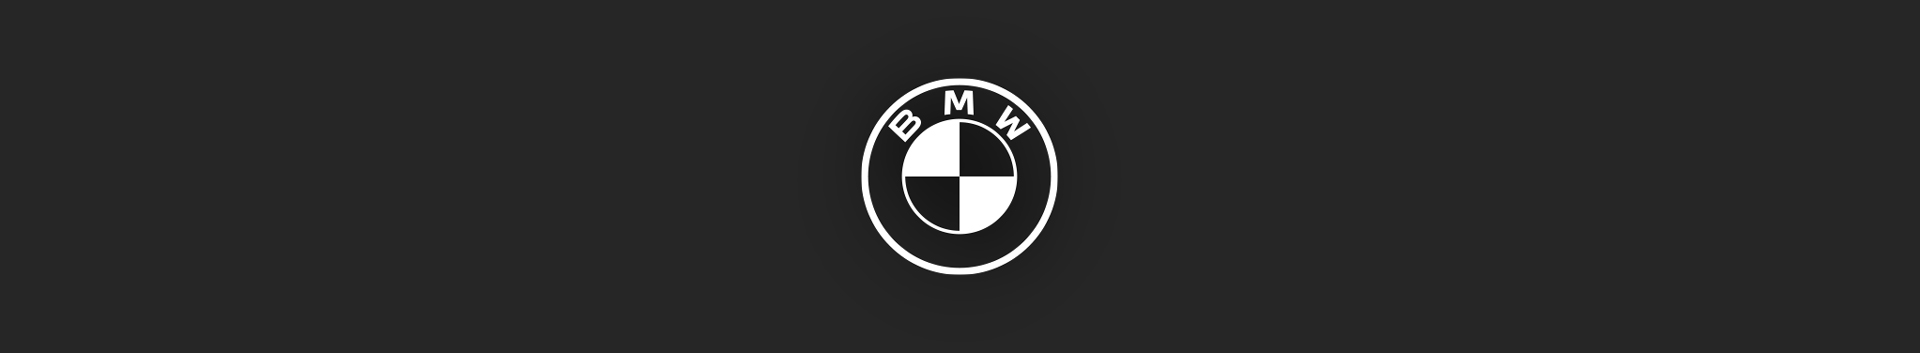 BMW roundel logo in white on top of a BMW-dark-grey background.